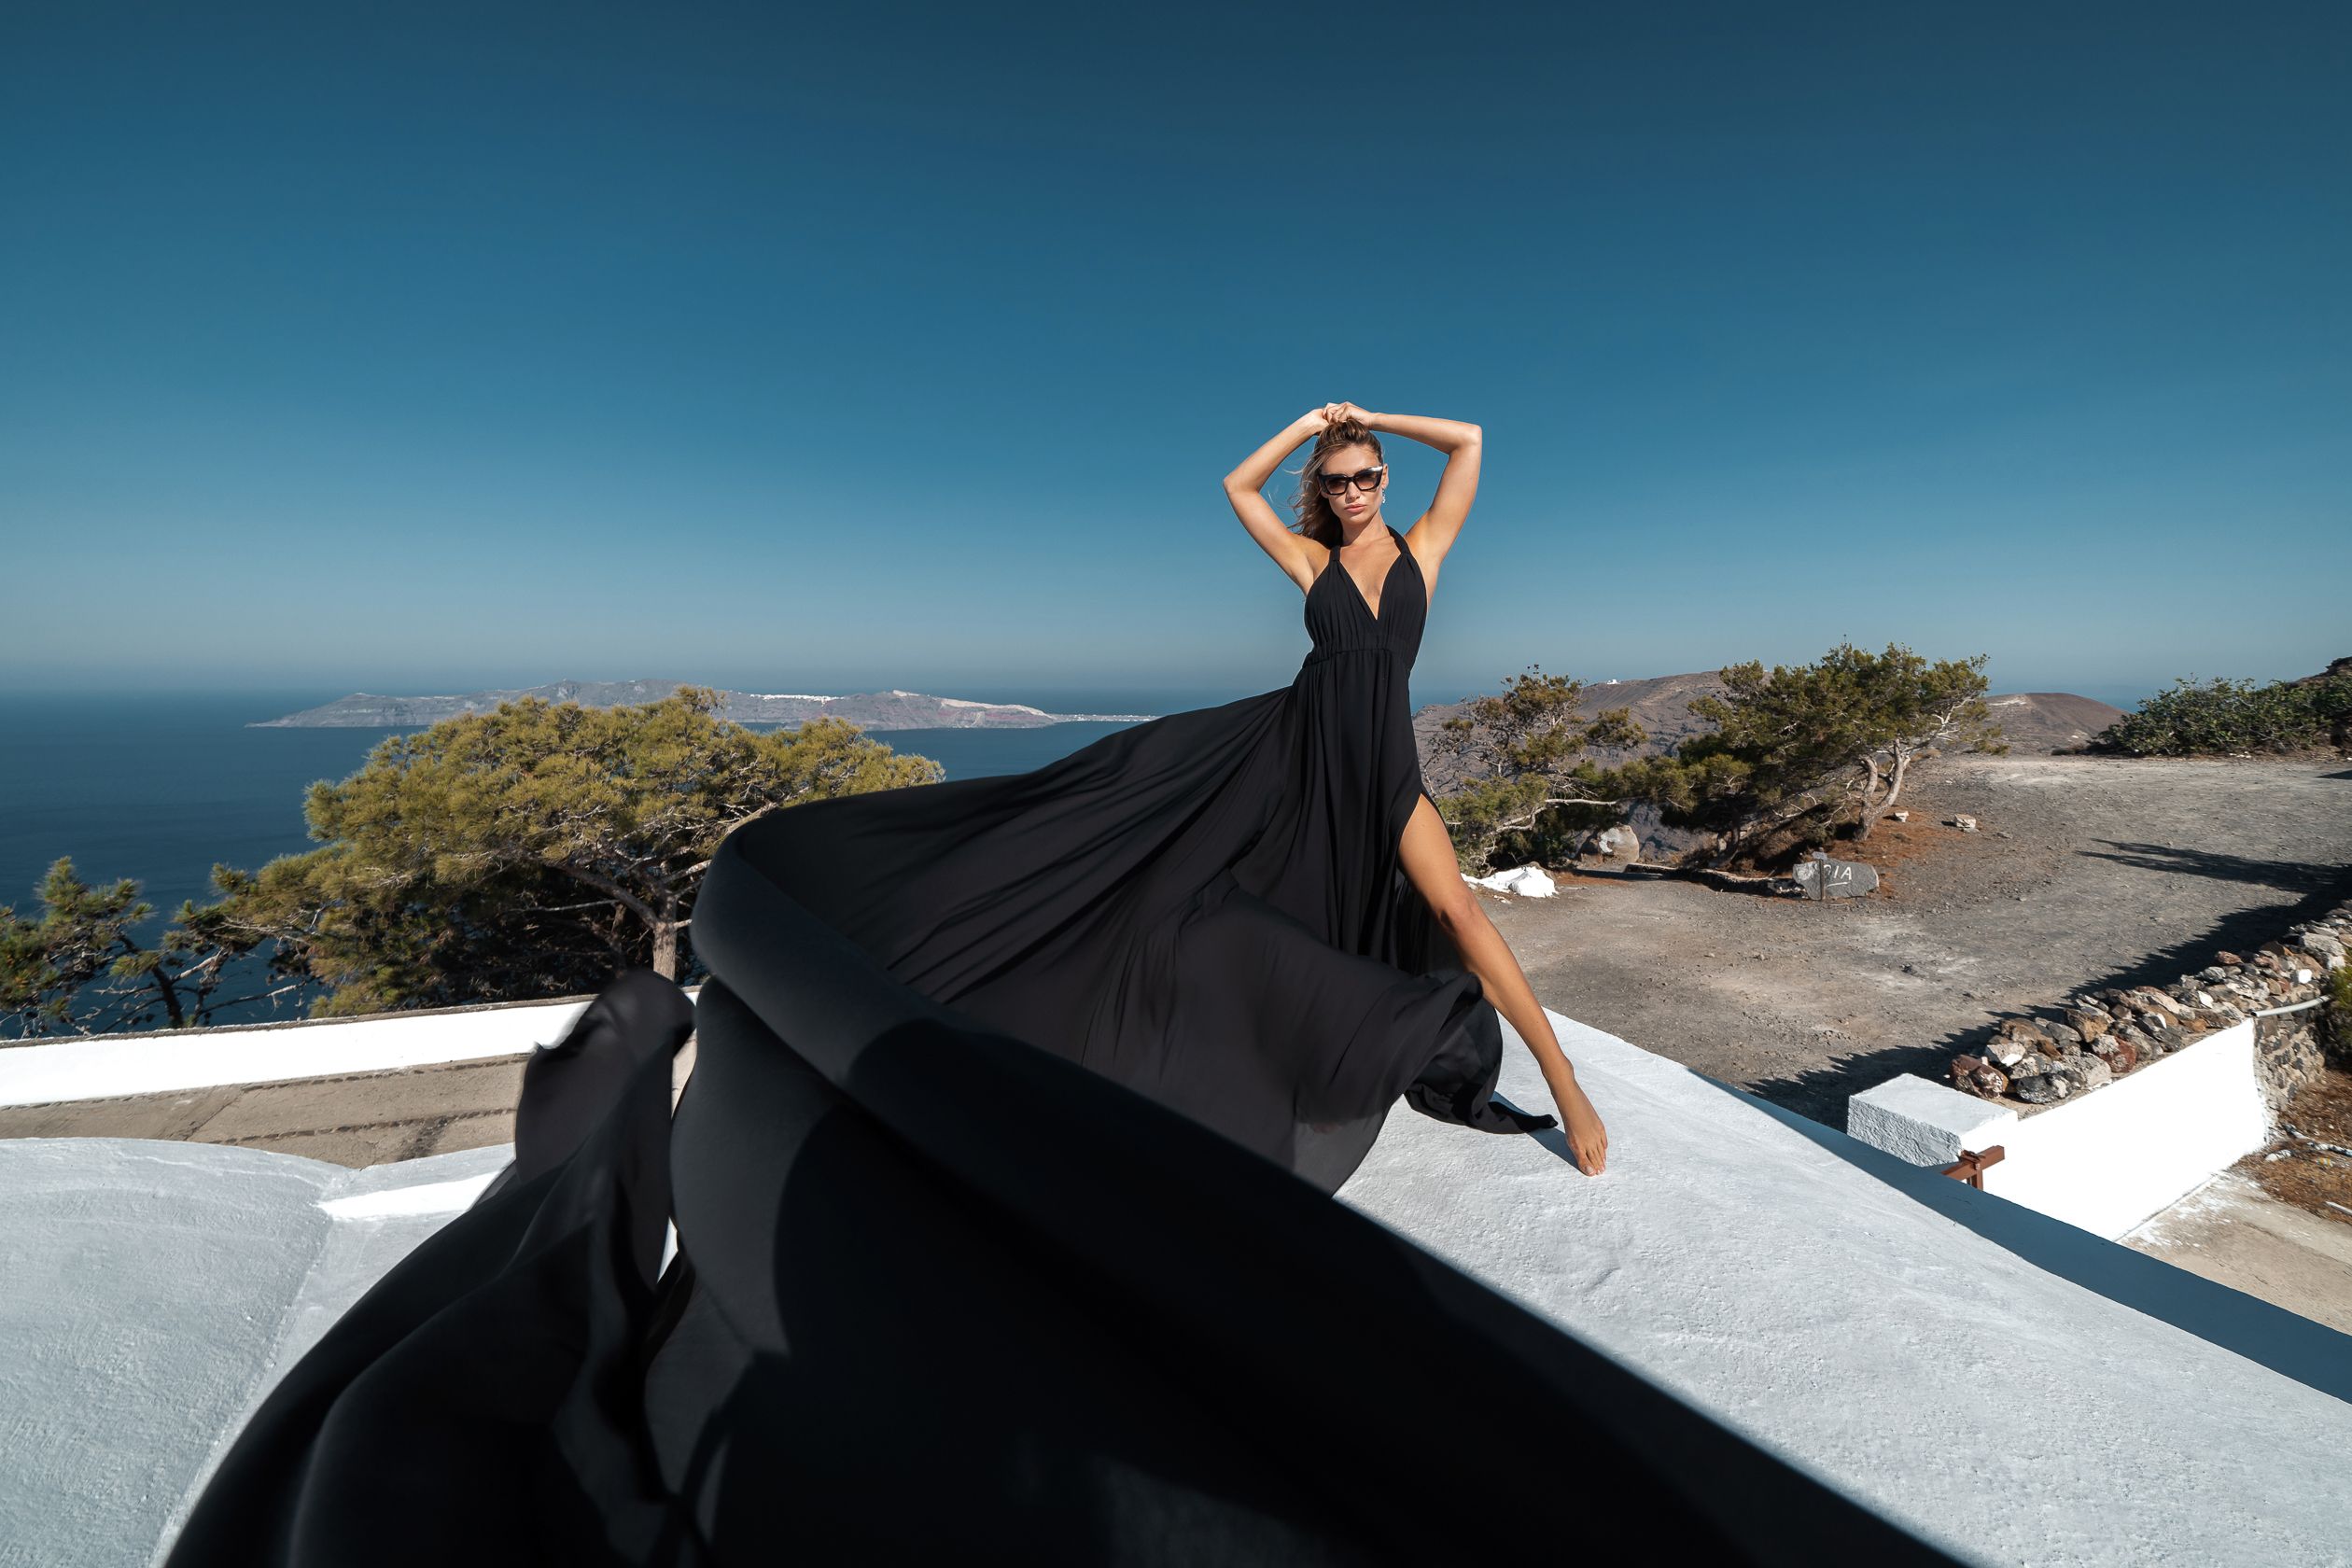 Black flying Santorini dress photoshoot